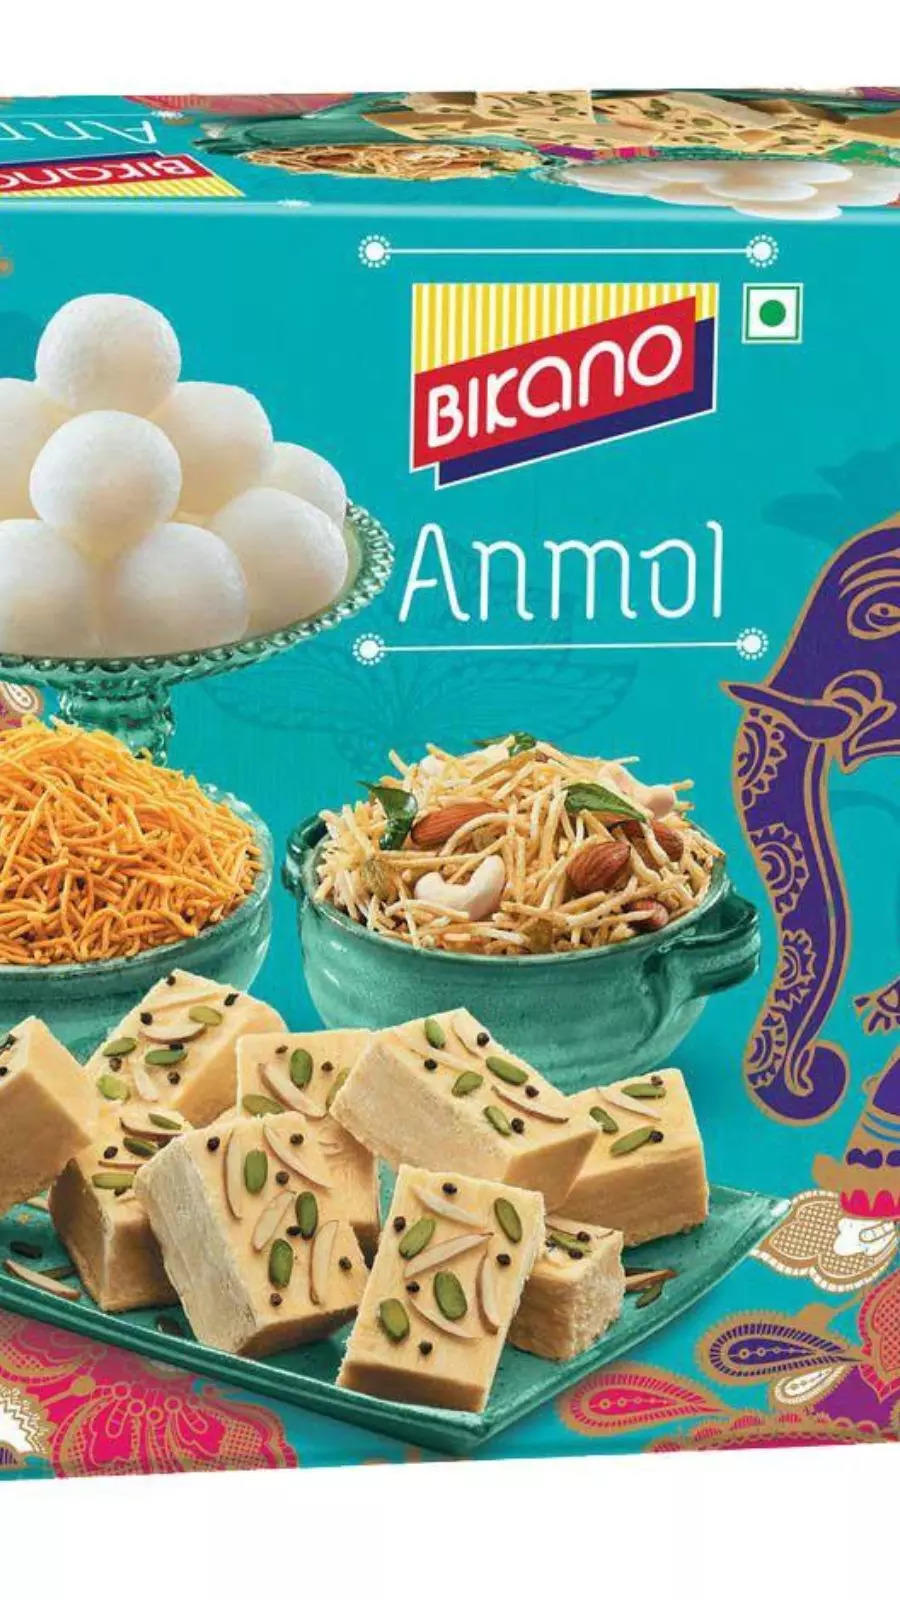 Bikano Rasmol Gift Pack 950gm offer at Almaya supermarket